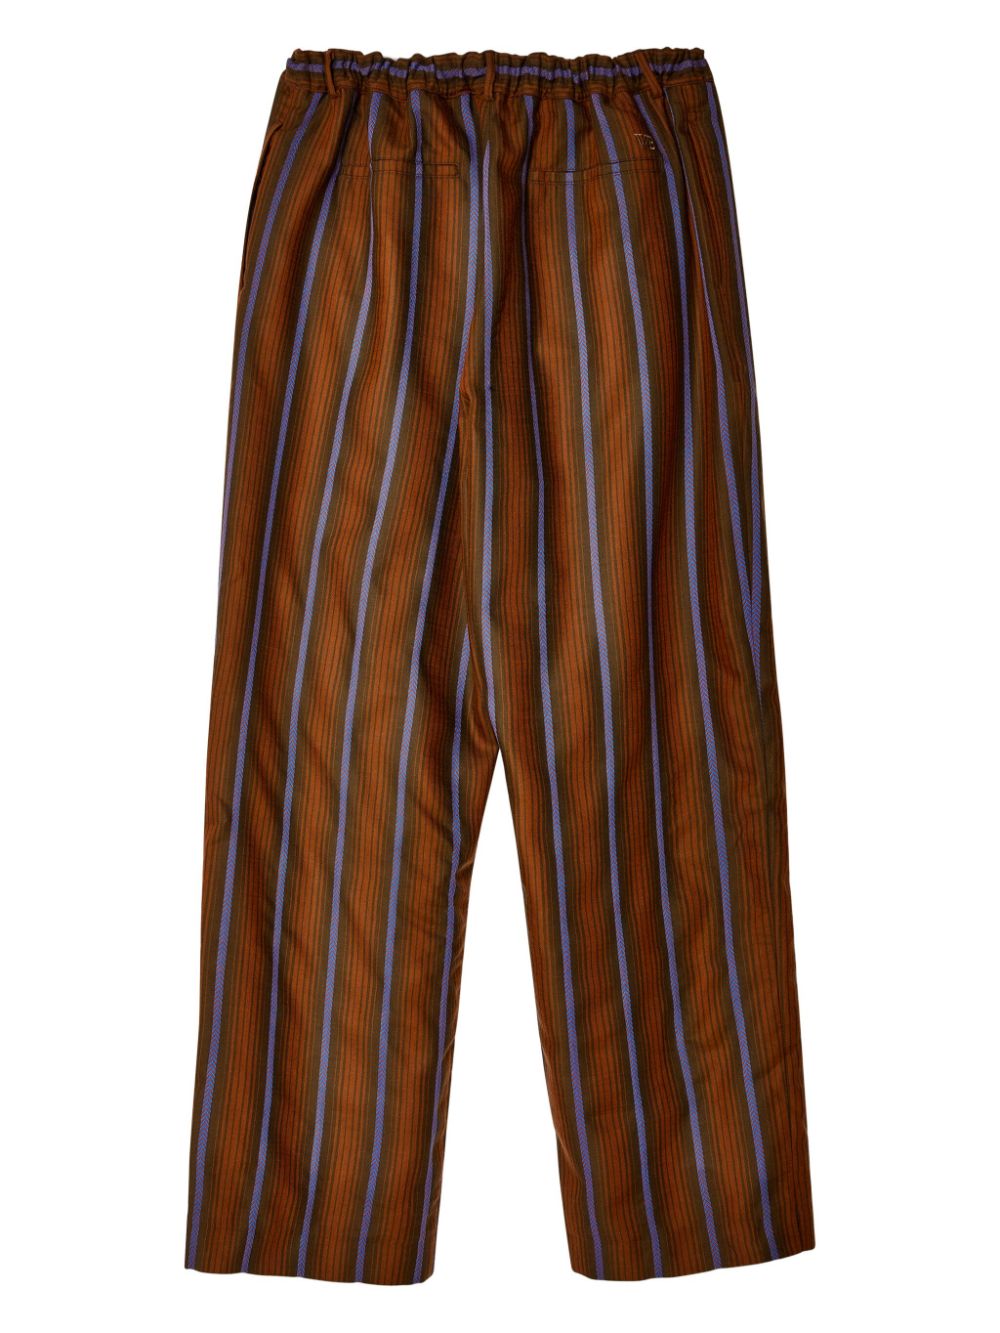 Chorus striped trousers